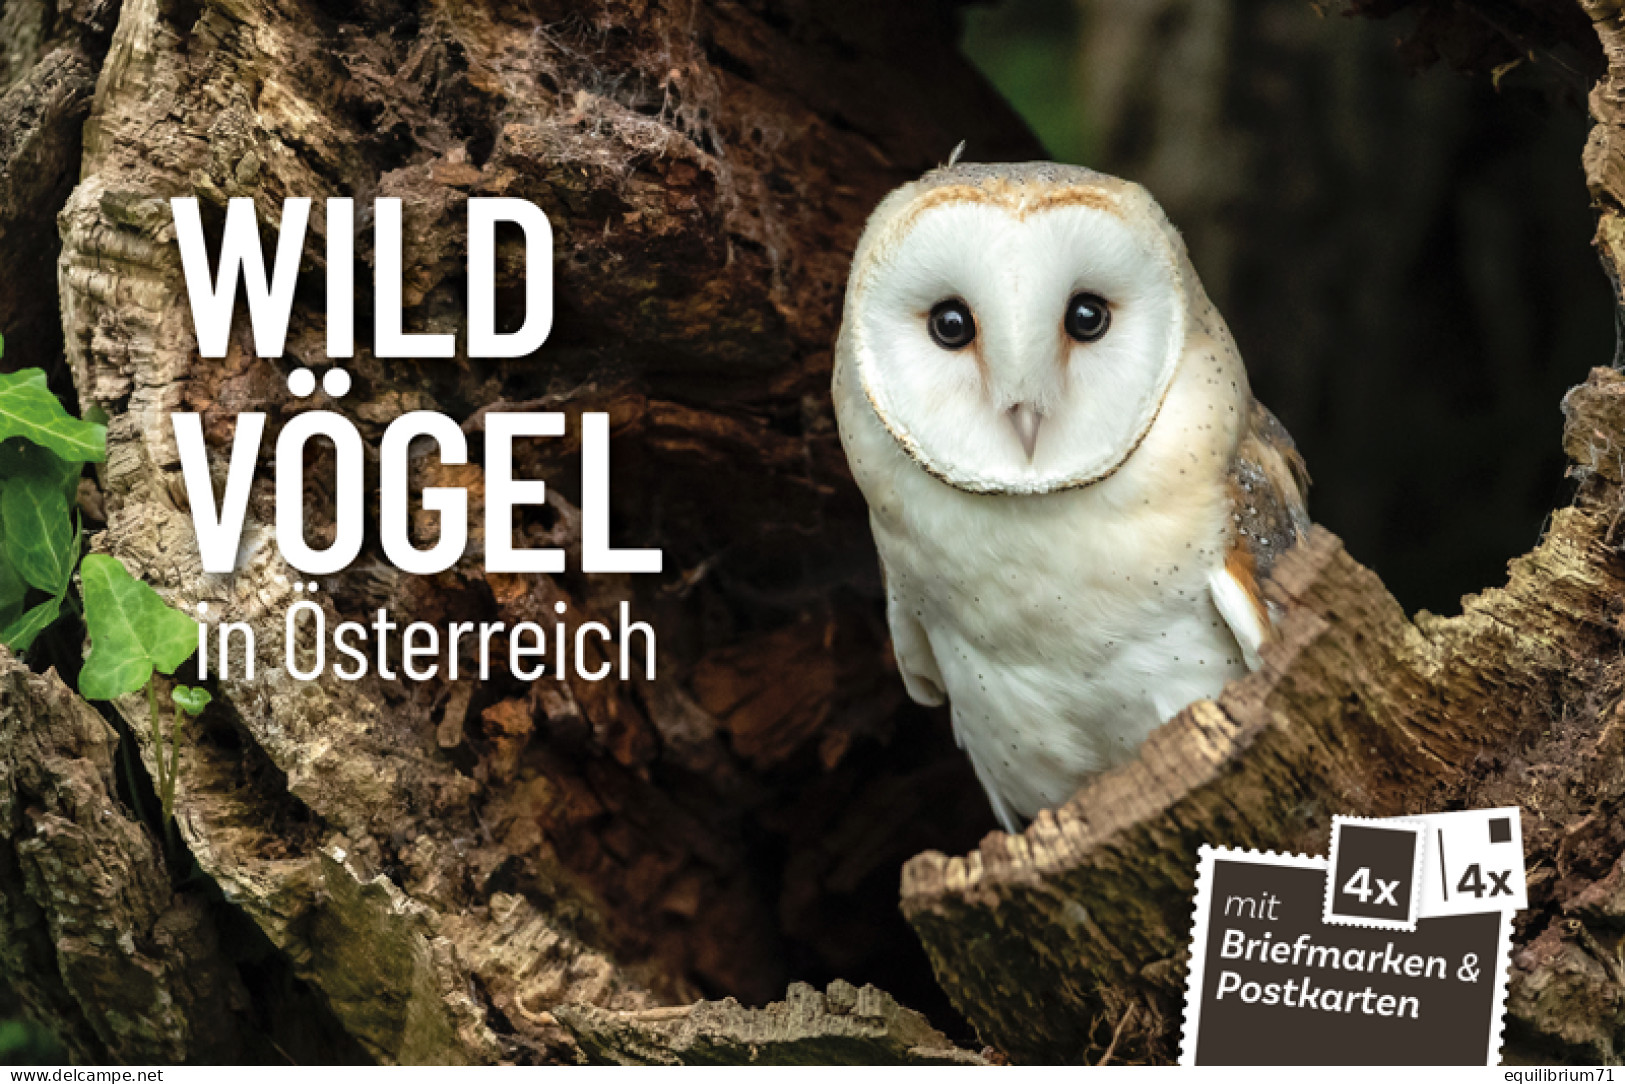 Autriche** - Carnet/Boekje + 4 CP/PK - Oiseaux Sauvages En Autriche/Wilde Vogels In Oostenrijk/Wildvögel In Österreich - Geese